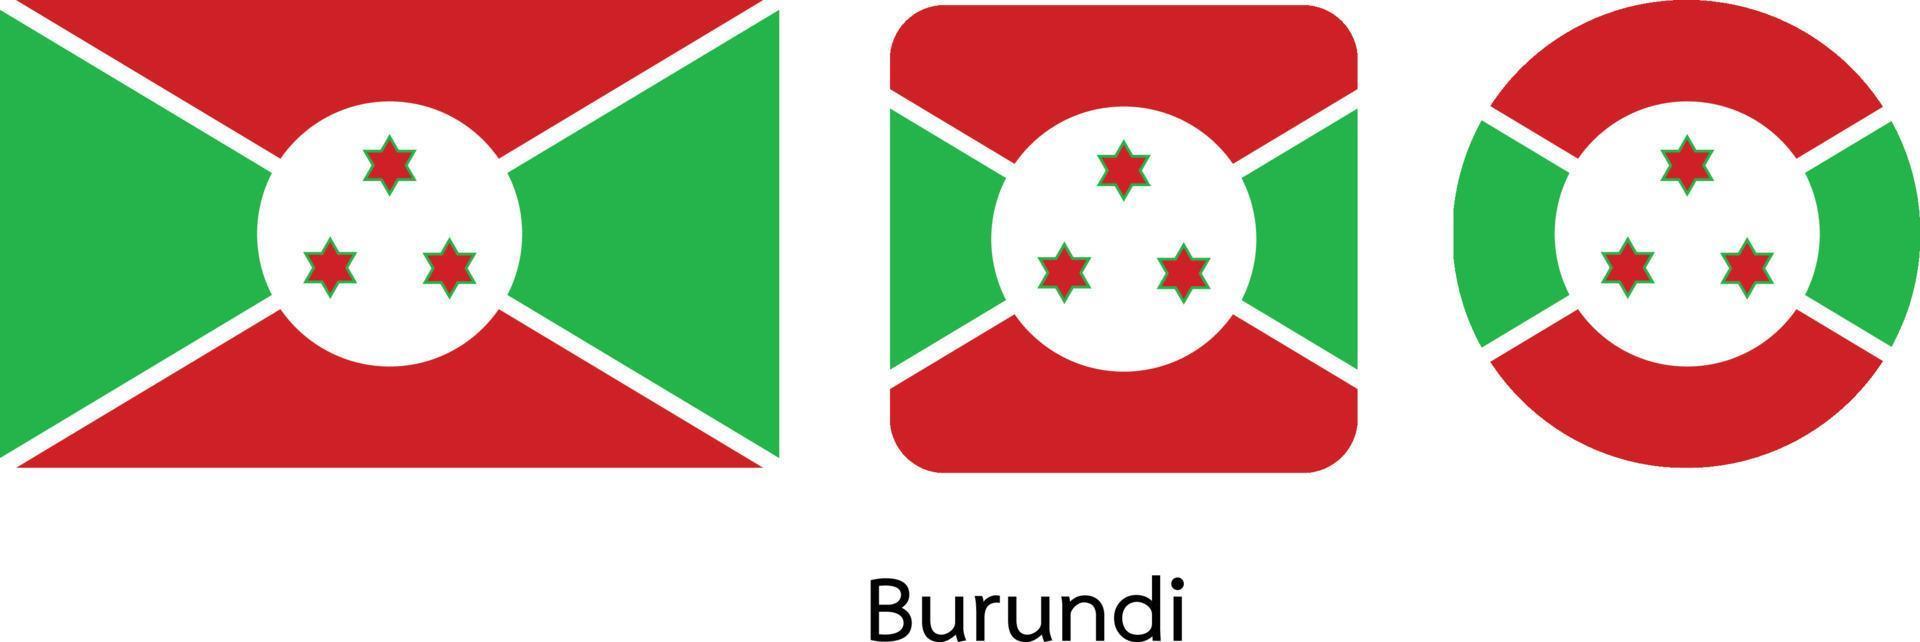 burundis flagga, vektorillustration vektor